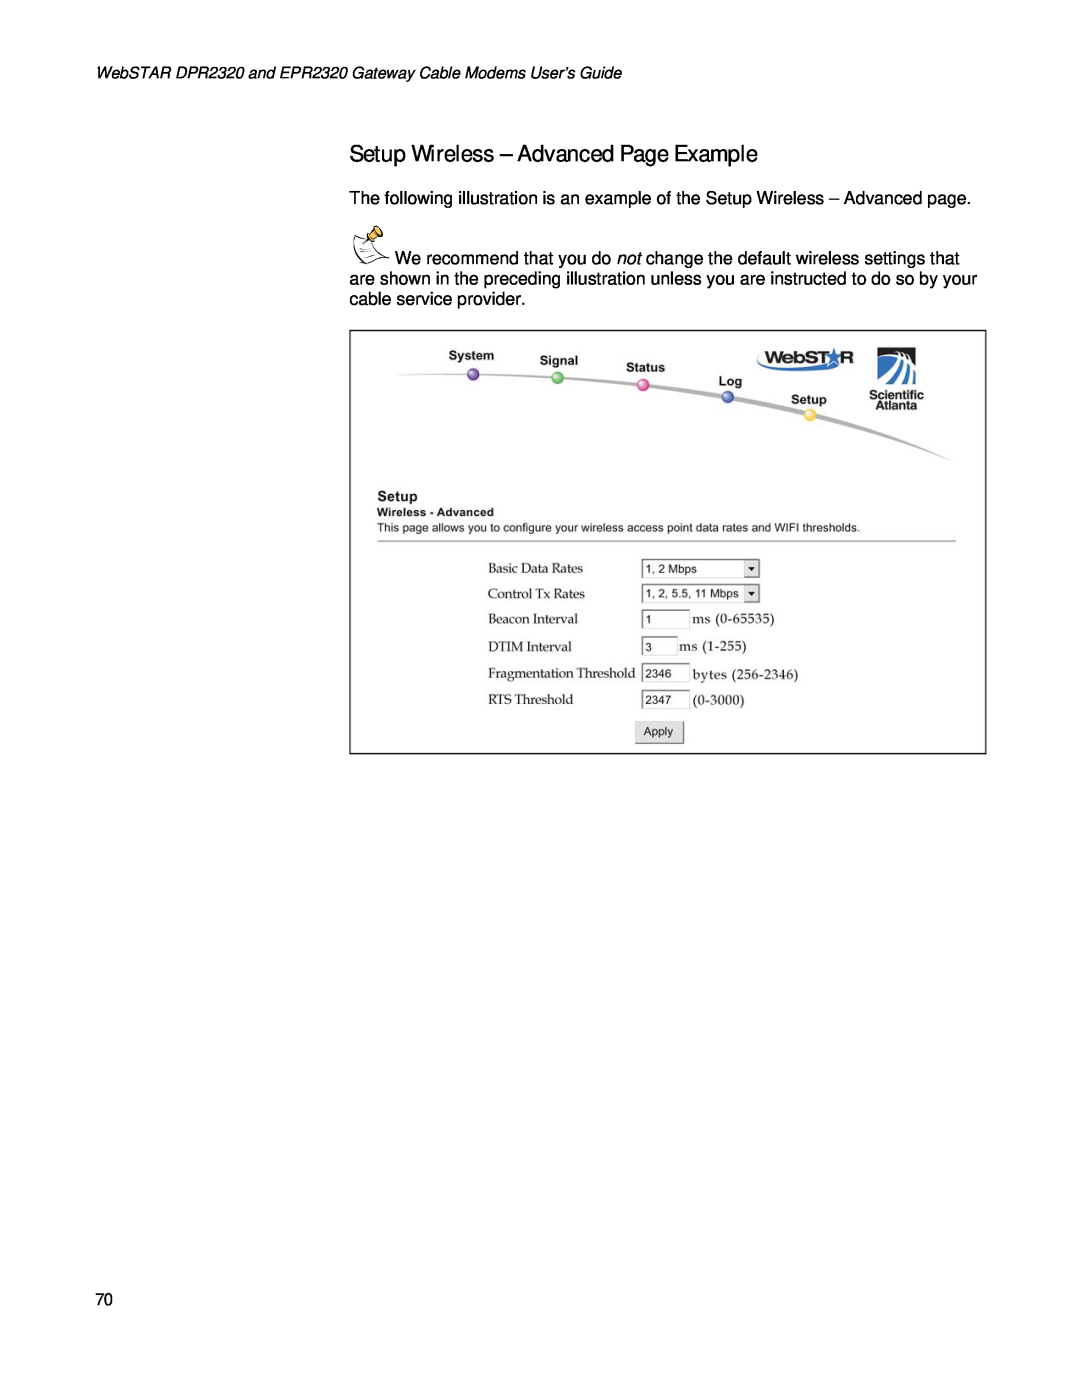 Apple DPR2320TM, EPR2320TM manual Setup Wireless - Advanced Page Example 